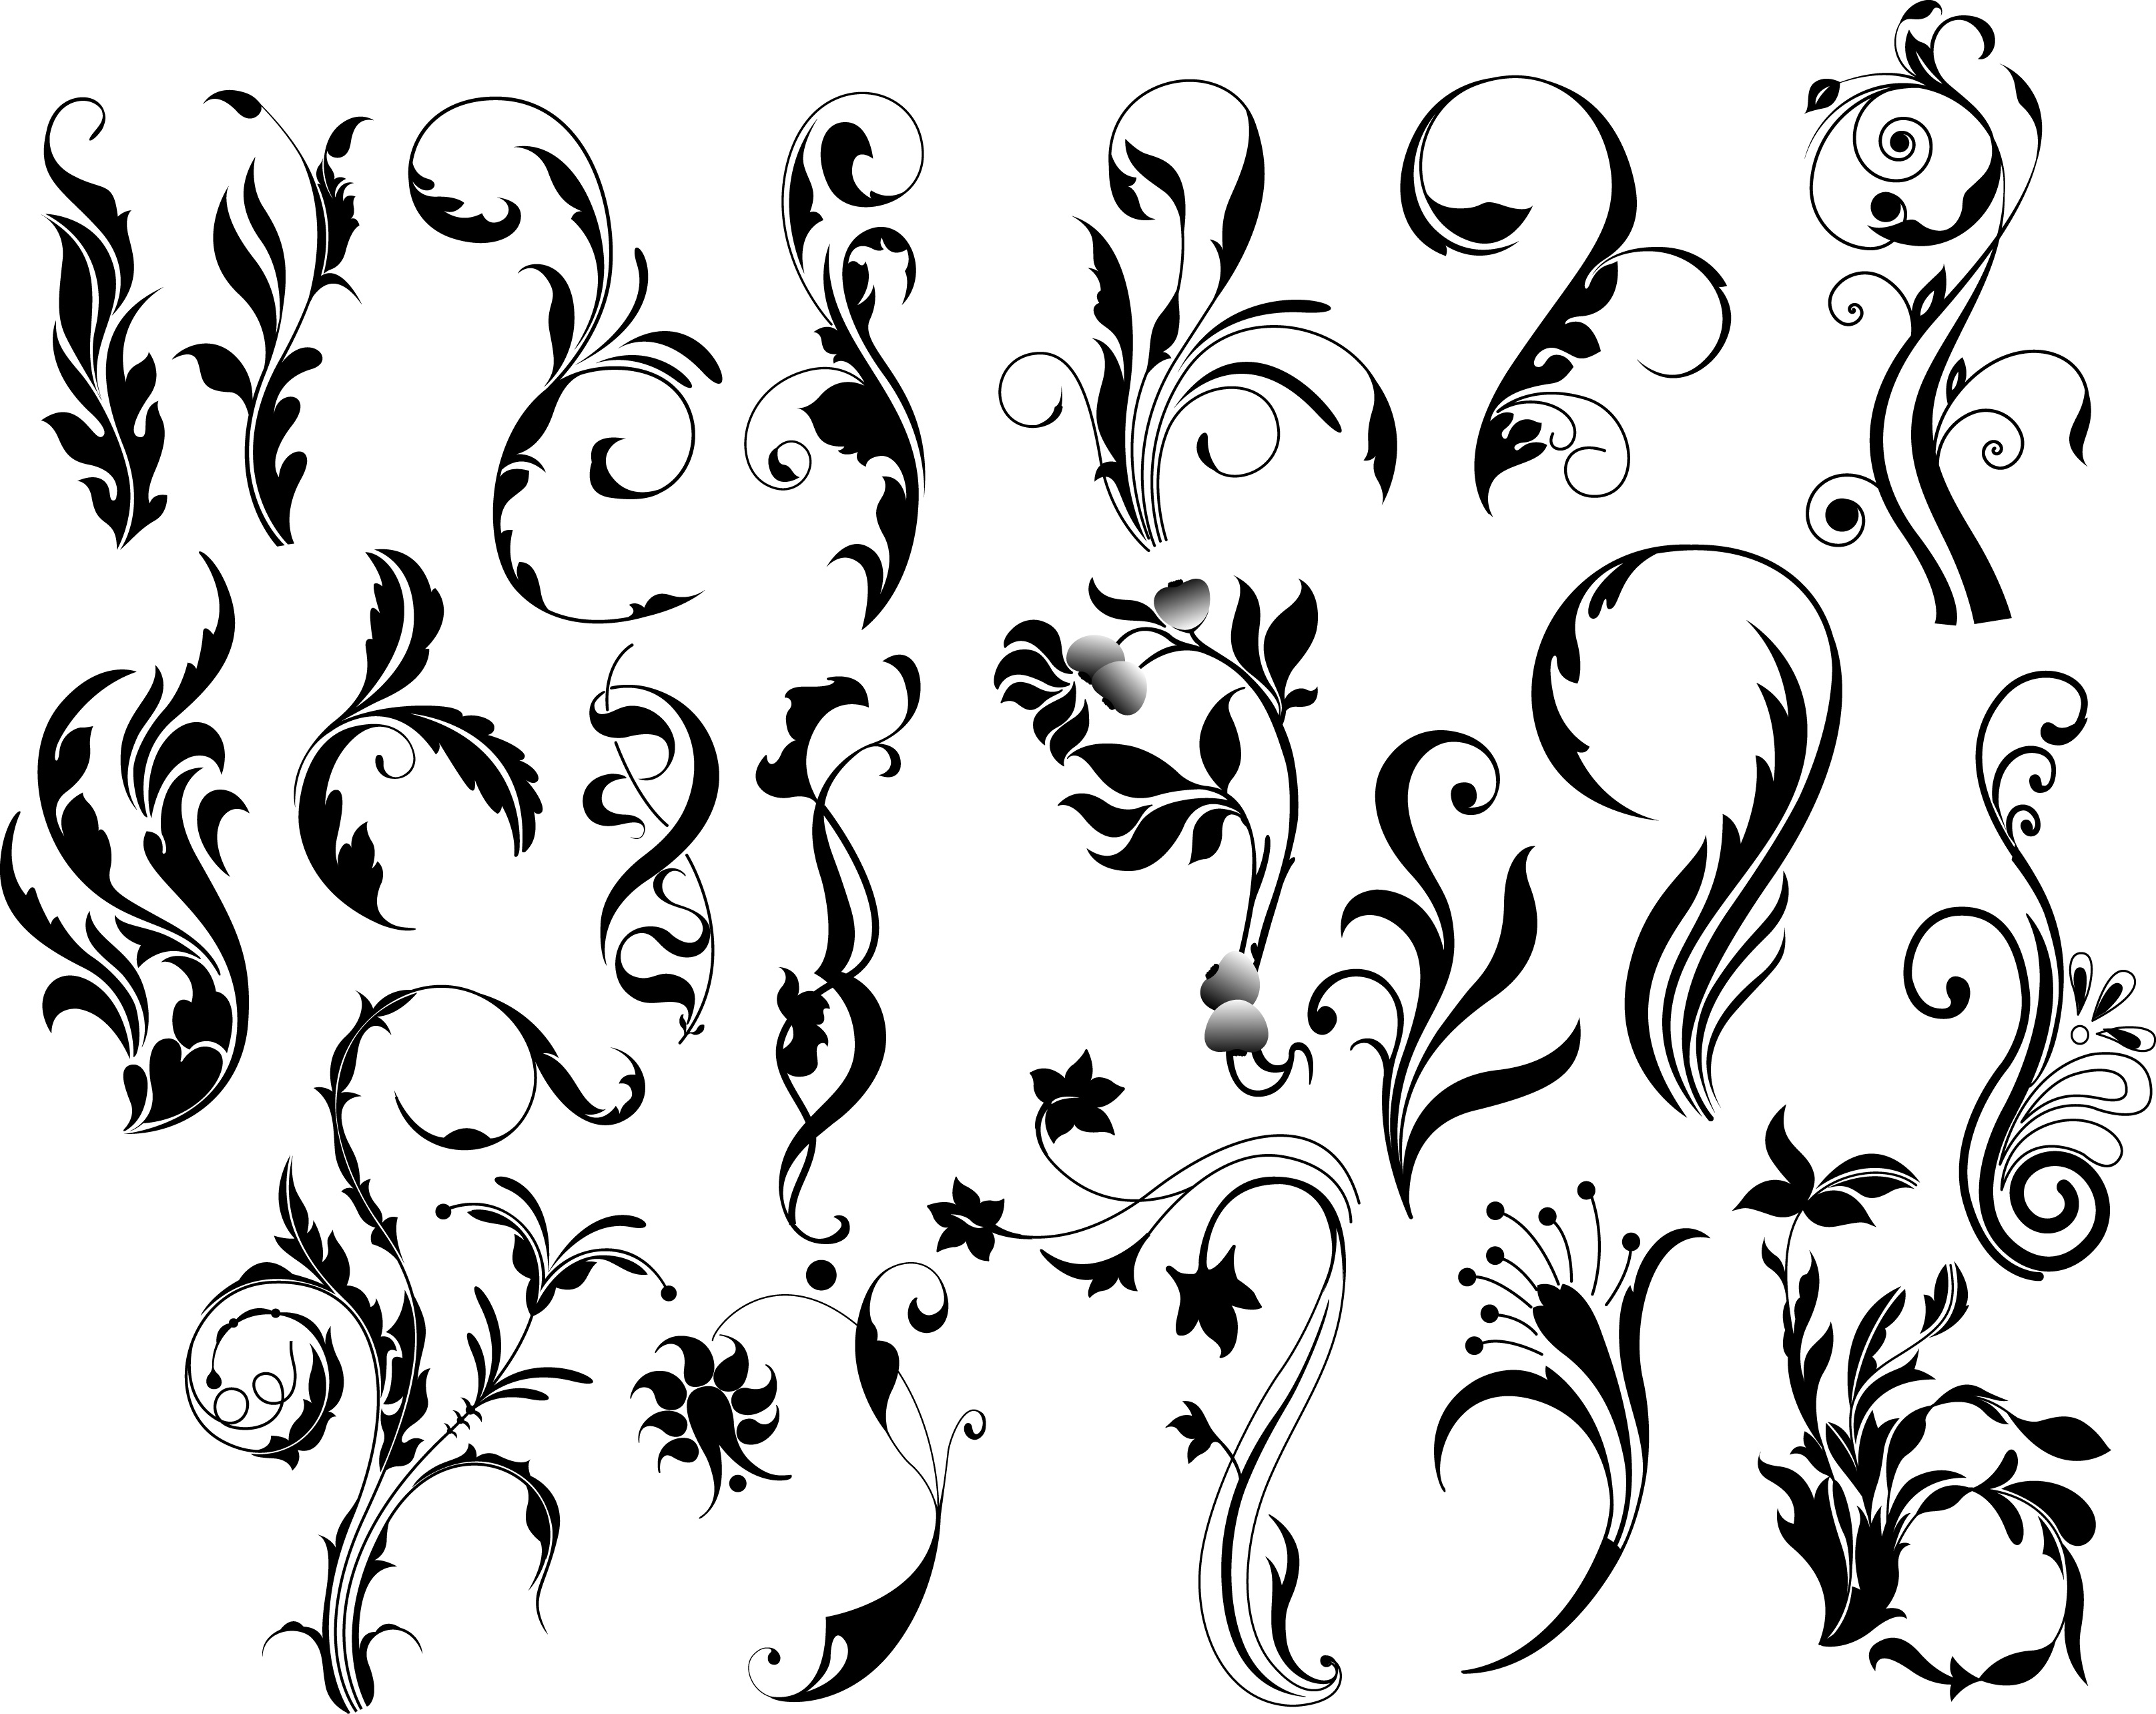 13 Leaf Swirl Vector Images